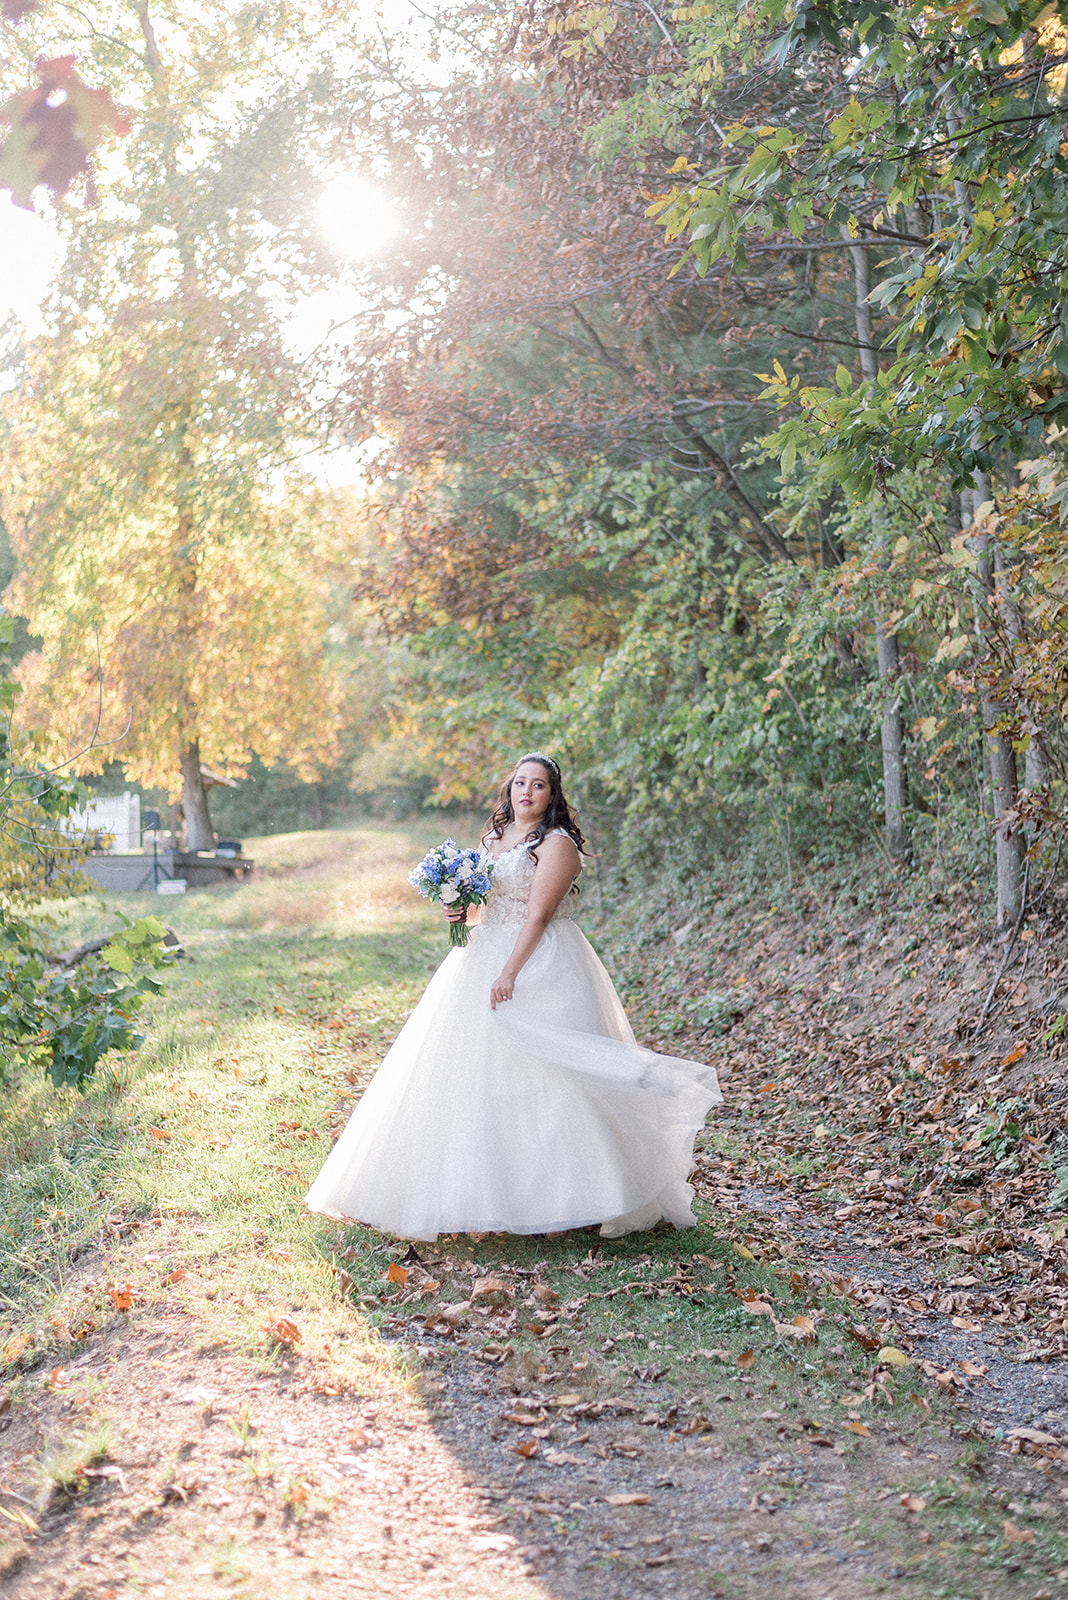 Pennsylvania wedding photographer captures bride spinning dress while holding bridal bouquet